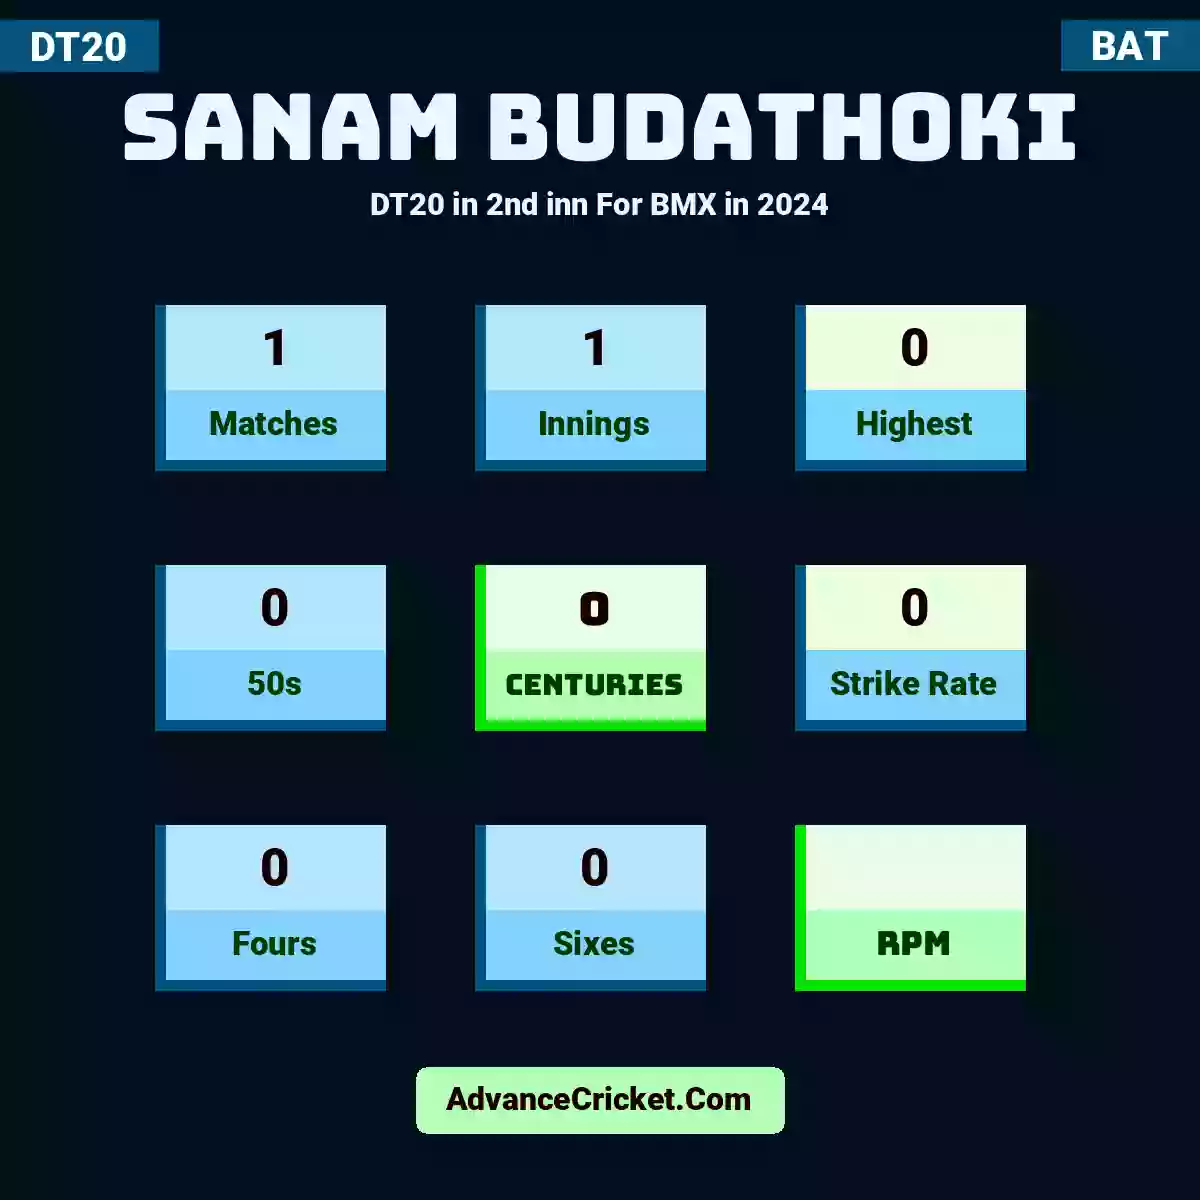 Sanam Budathoki DT20  in 2nd inn For BMX in 2024, Sanam Budathoki played 1 matches, scored 0 runs as highest, 0 half-centuries, and 0 centuries, with a strike rate of 0. S.Budathoki hit 0 fours and 0 sixes.